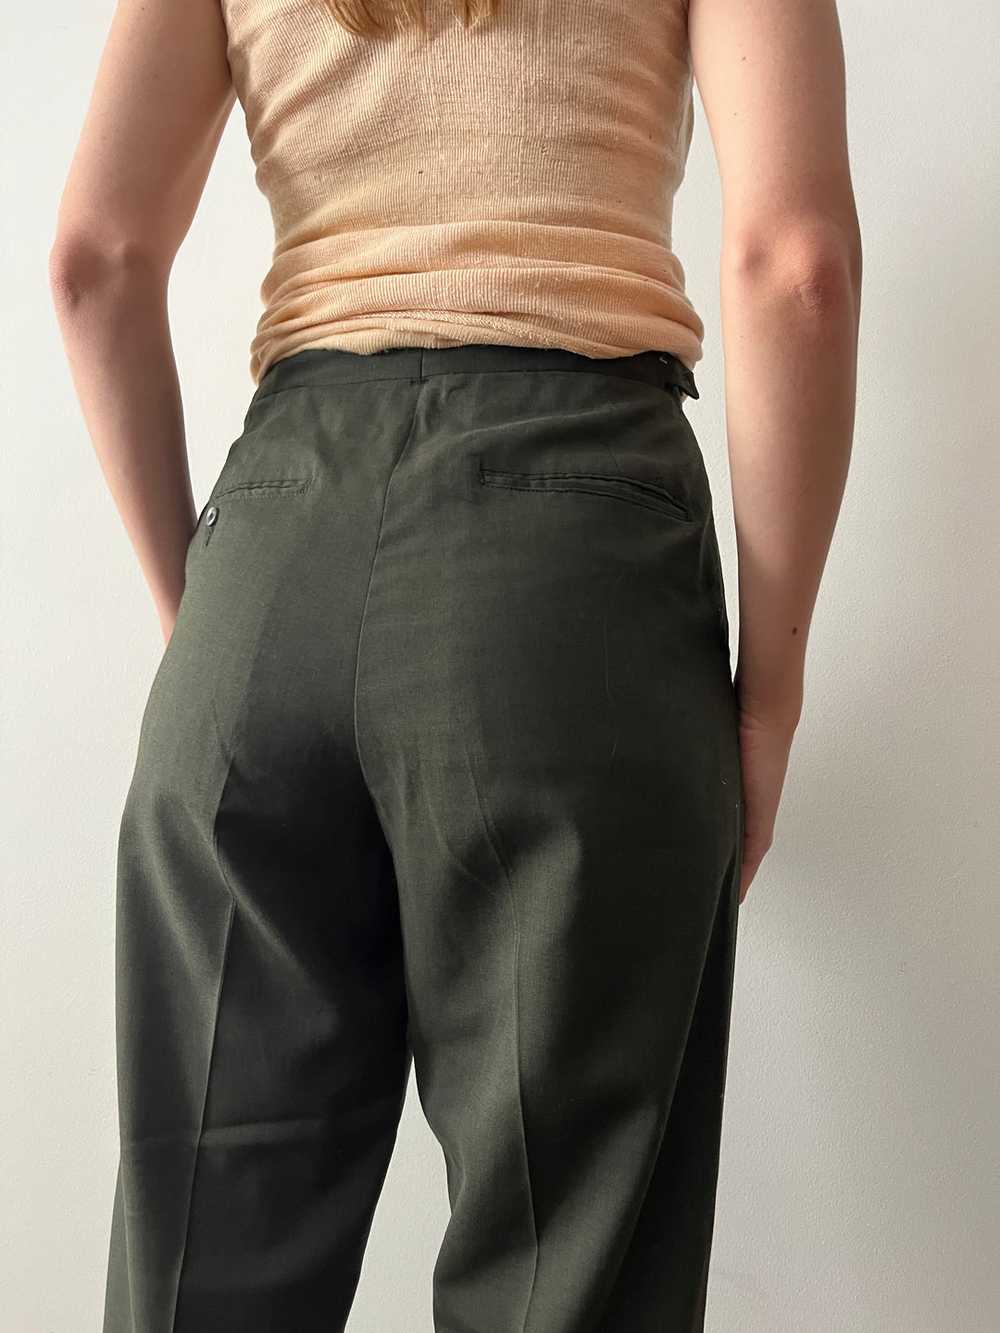 60s Green Sears Casual Pants - image 6